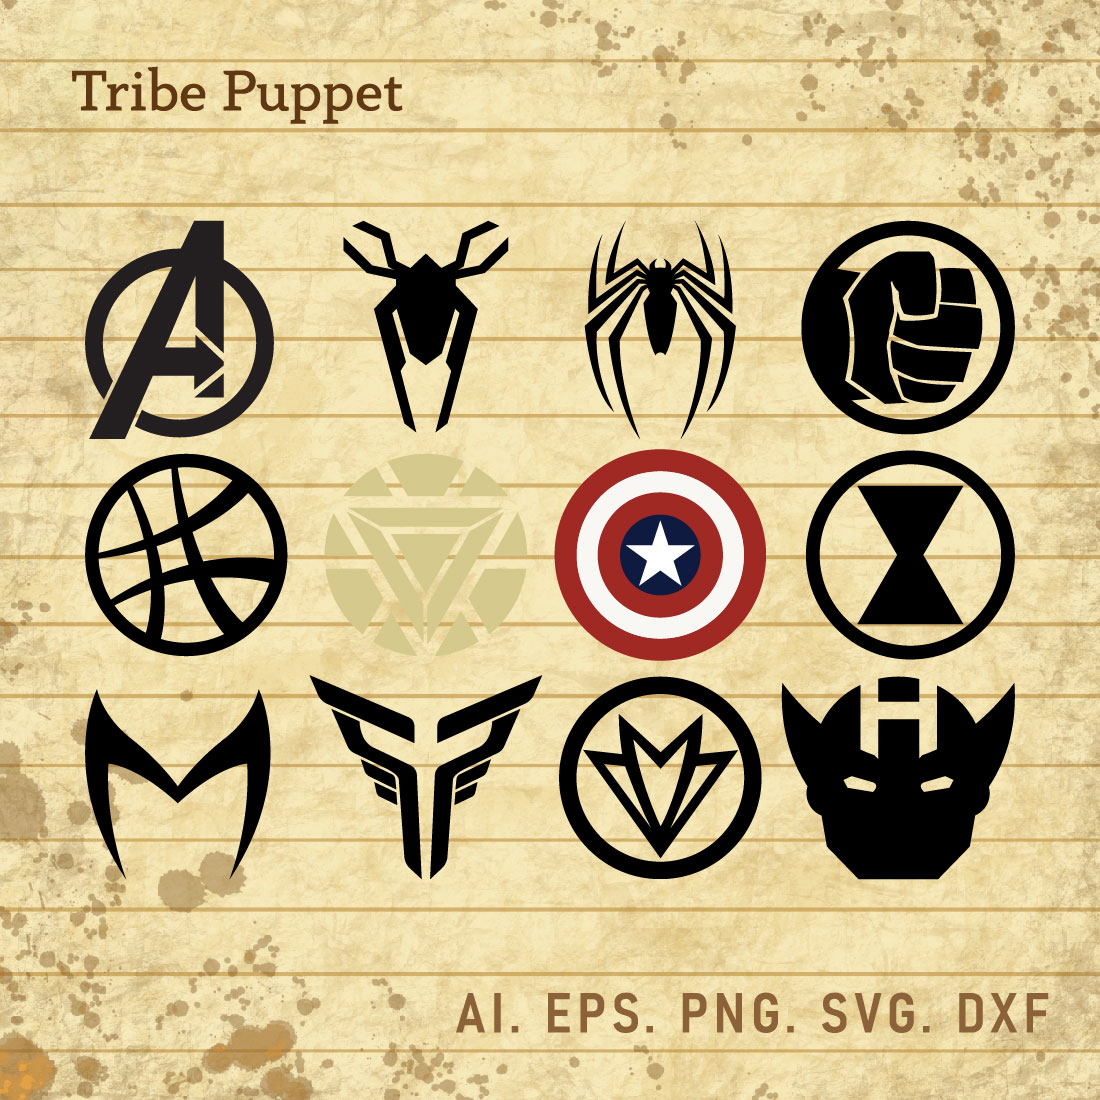 Avengers Logo Vector Set cover image.